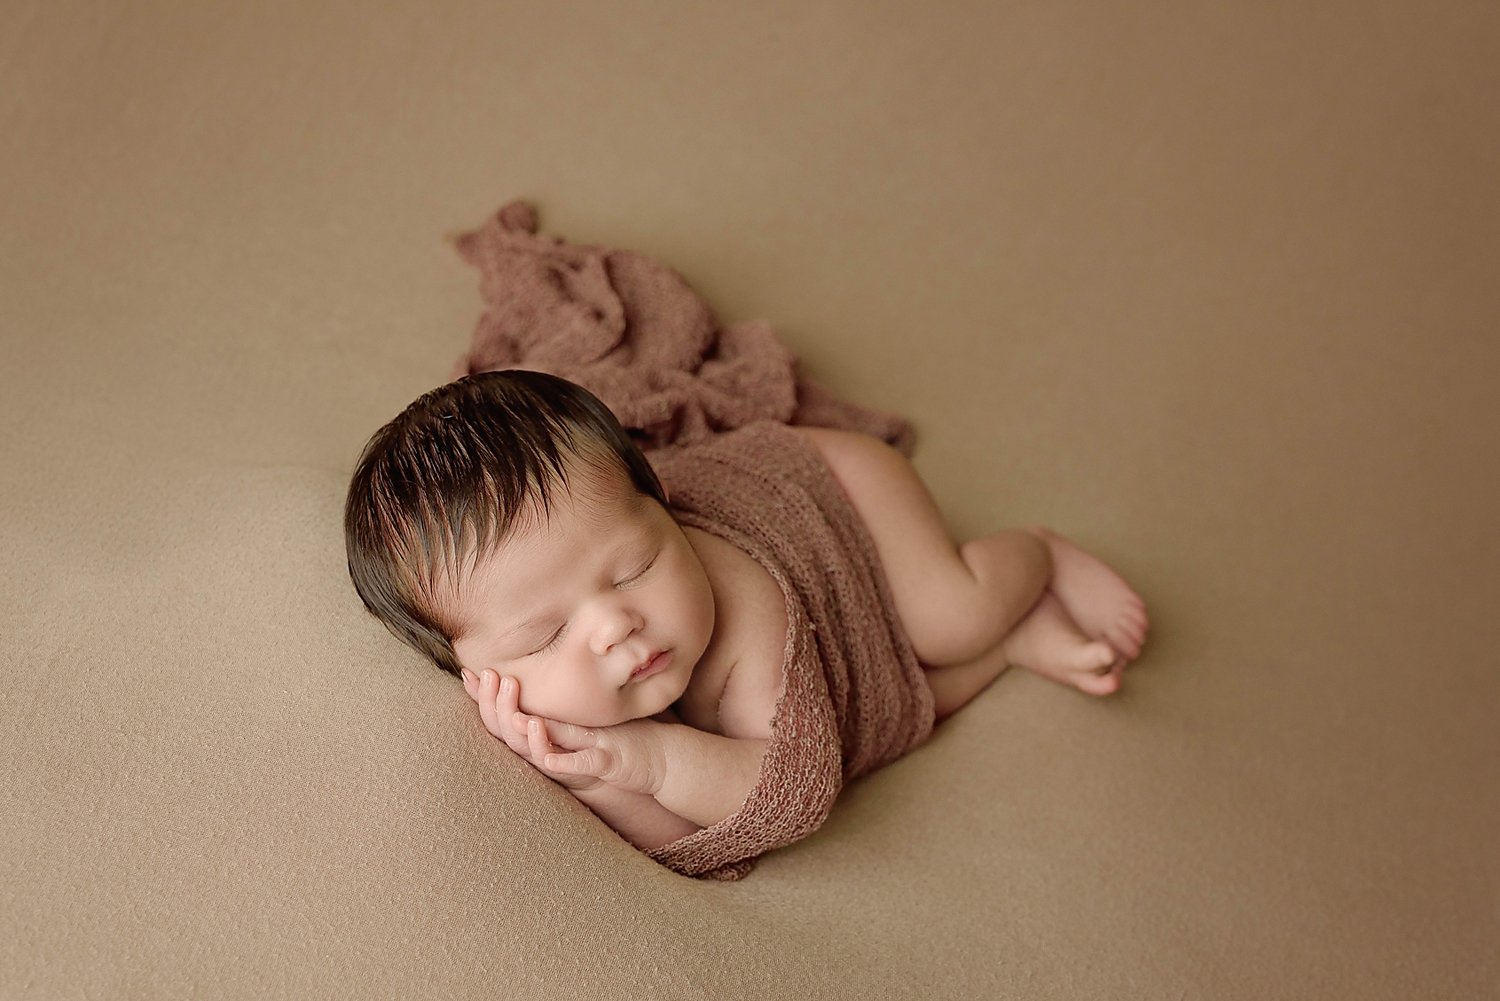 kimberly-gb-photography-newborn-recien-nacido-fotografia-bebe-fotografo-puerto-rico-103.jpg